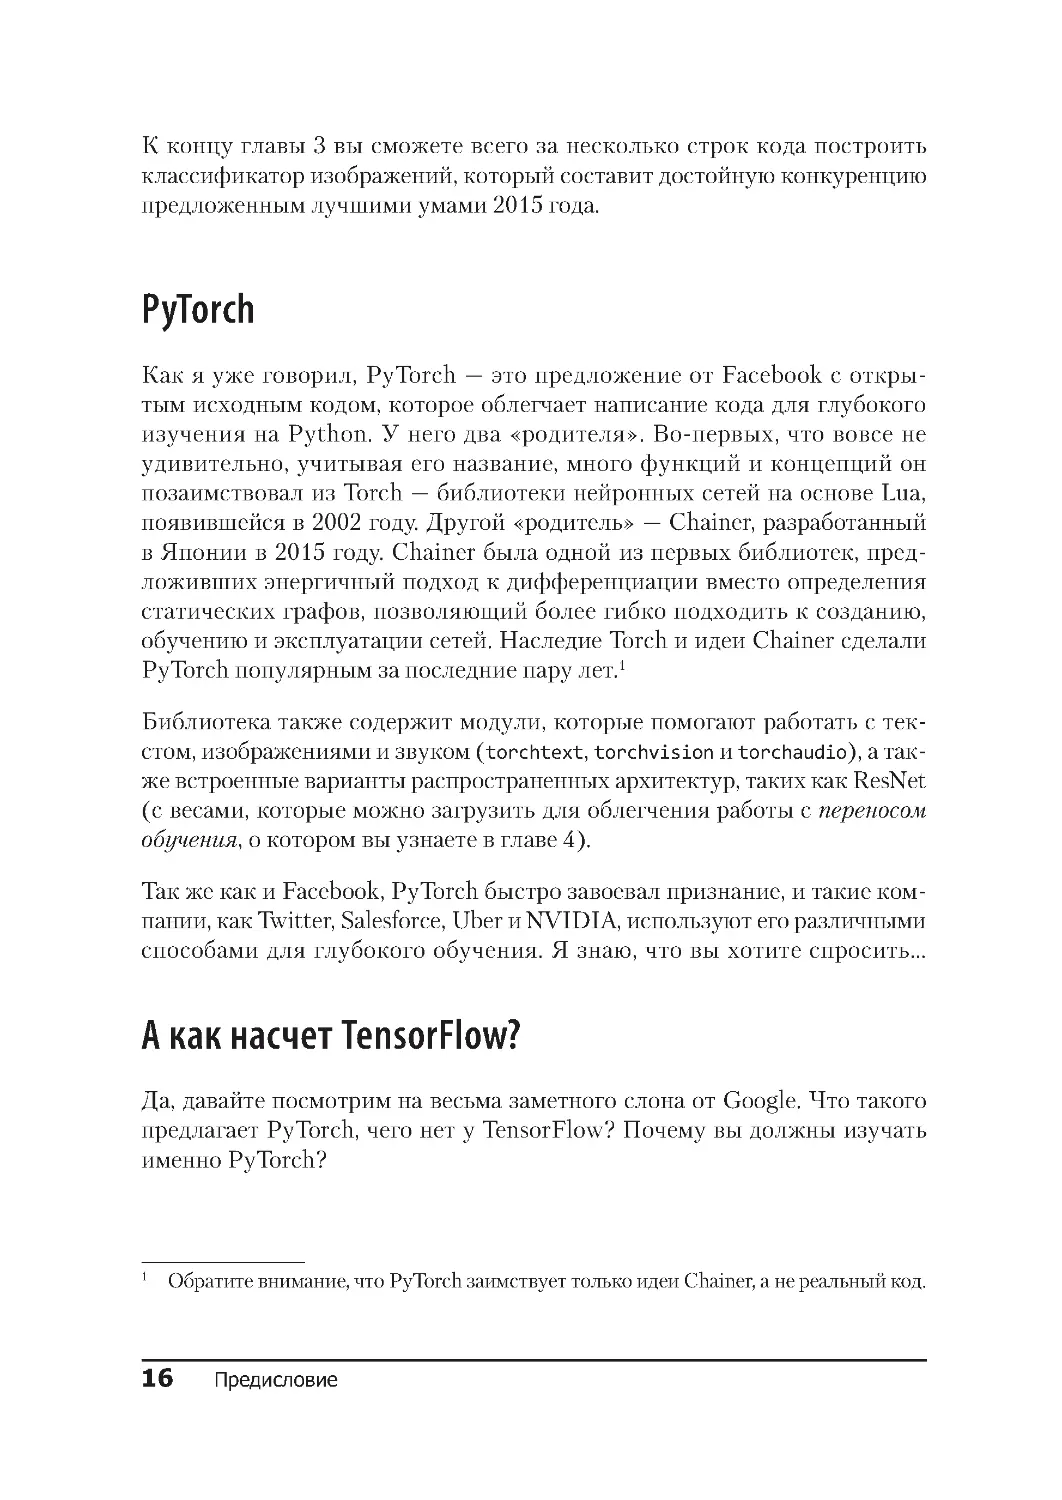 PyTorch
А как насчет TensorFlow?